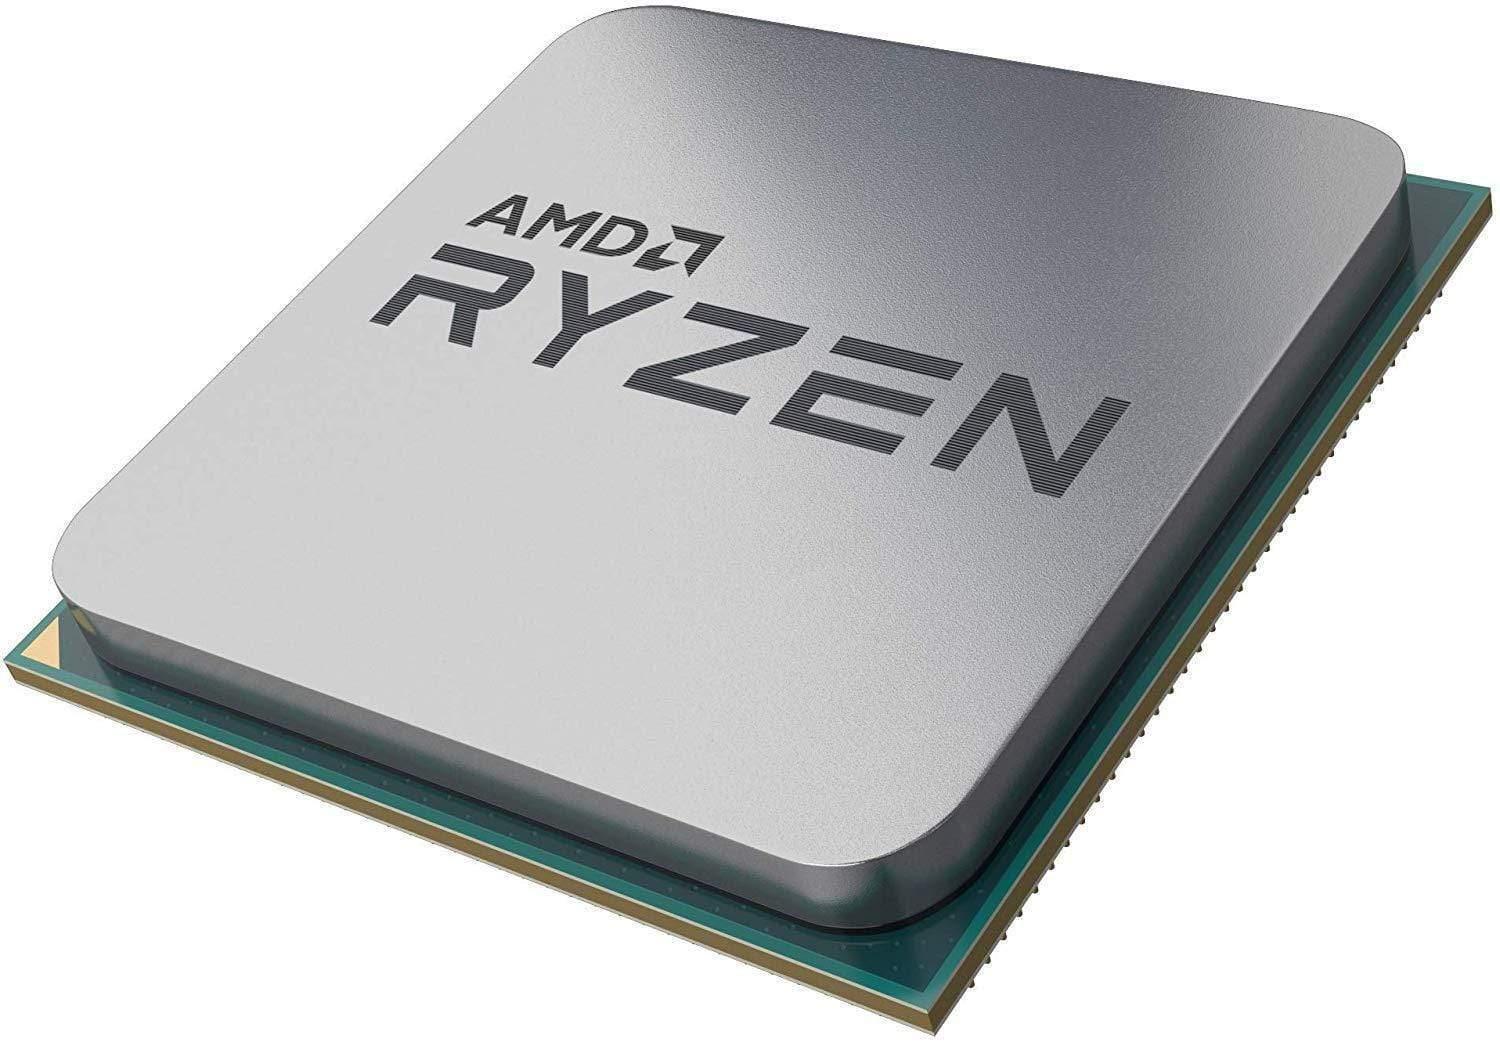 AMD Ryzen 5 3600X Desktop Processor 6 cores up to 4.4GHz-Processor-dealsplant